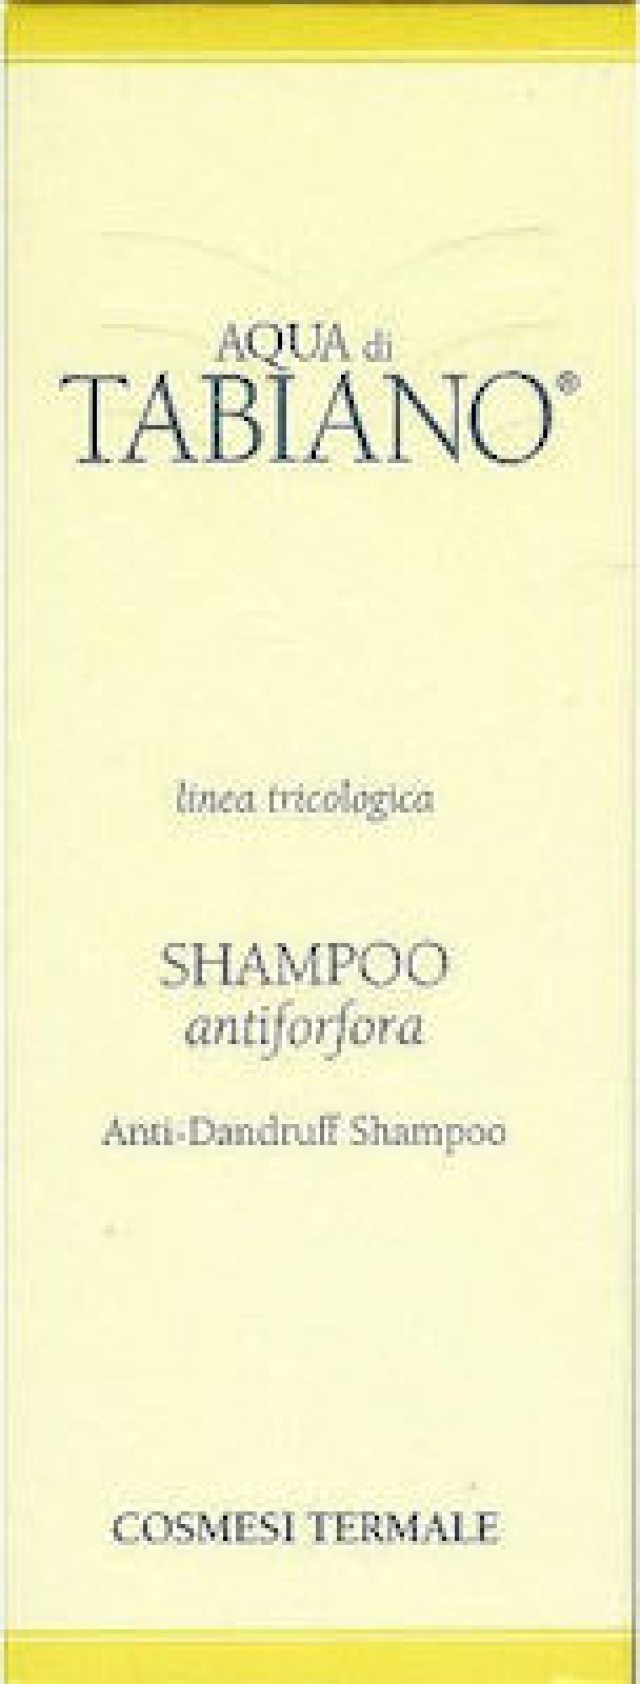 Tabiano Aqua Di Tabiano Antiforfora Shampoo 200ml